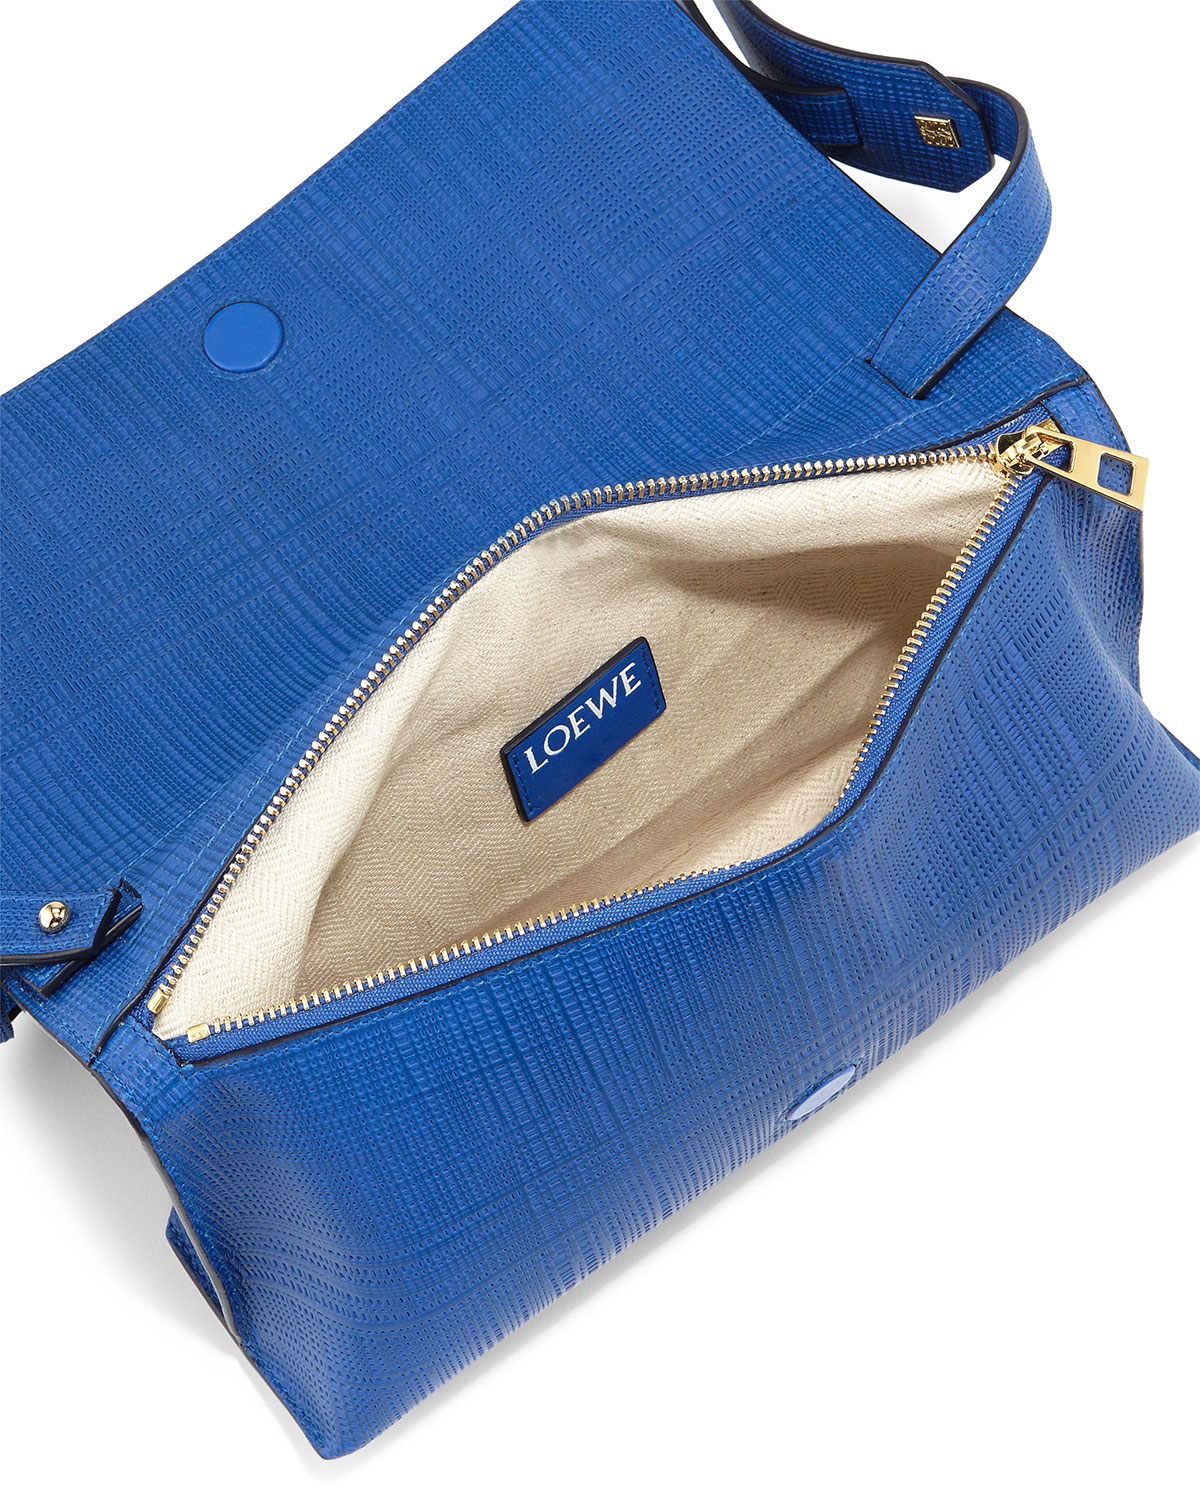 Loewe Leather Calfskin Clutch Bag W/shoulder Strap in Electric Blue (Blue) - Lyst